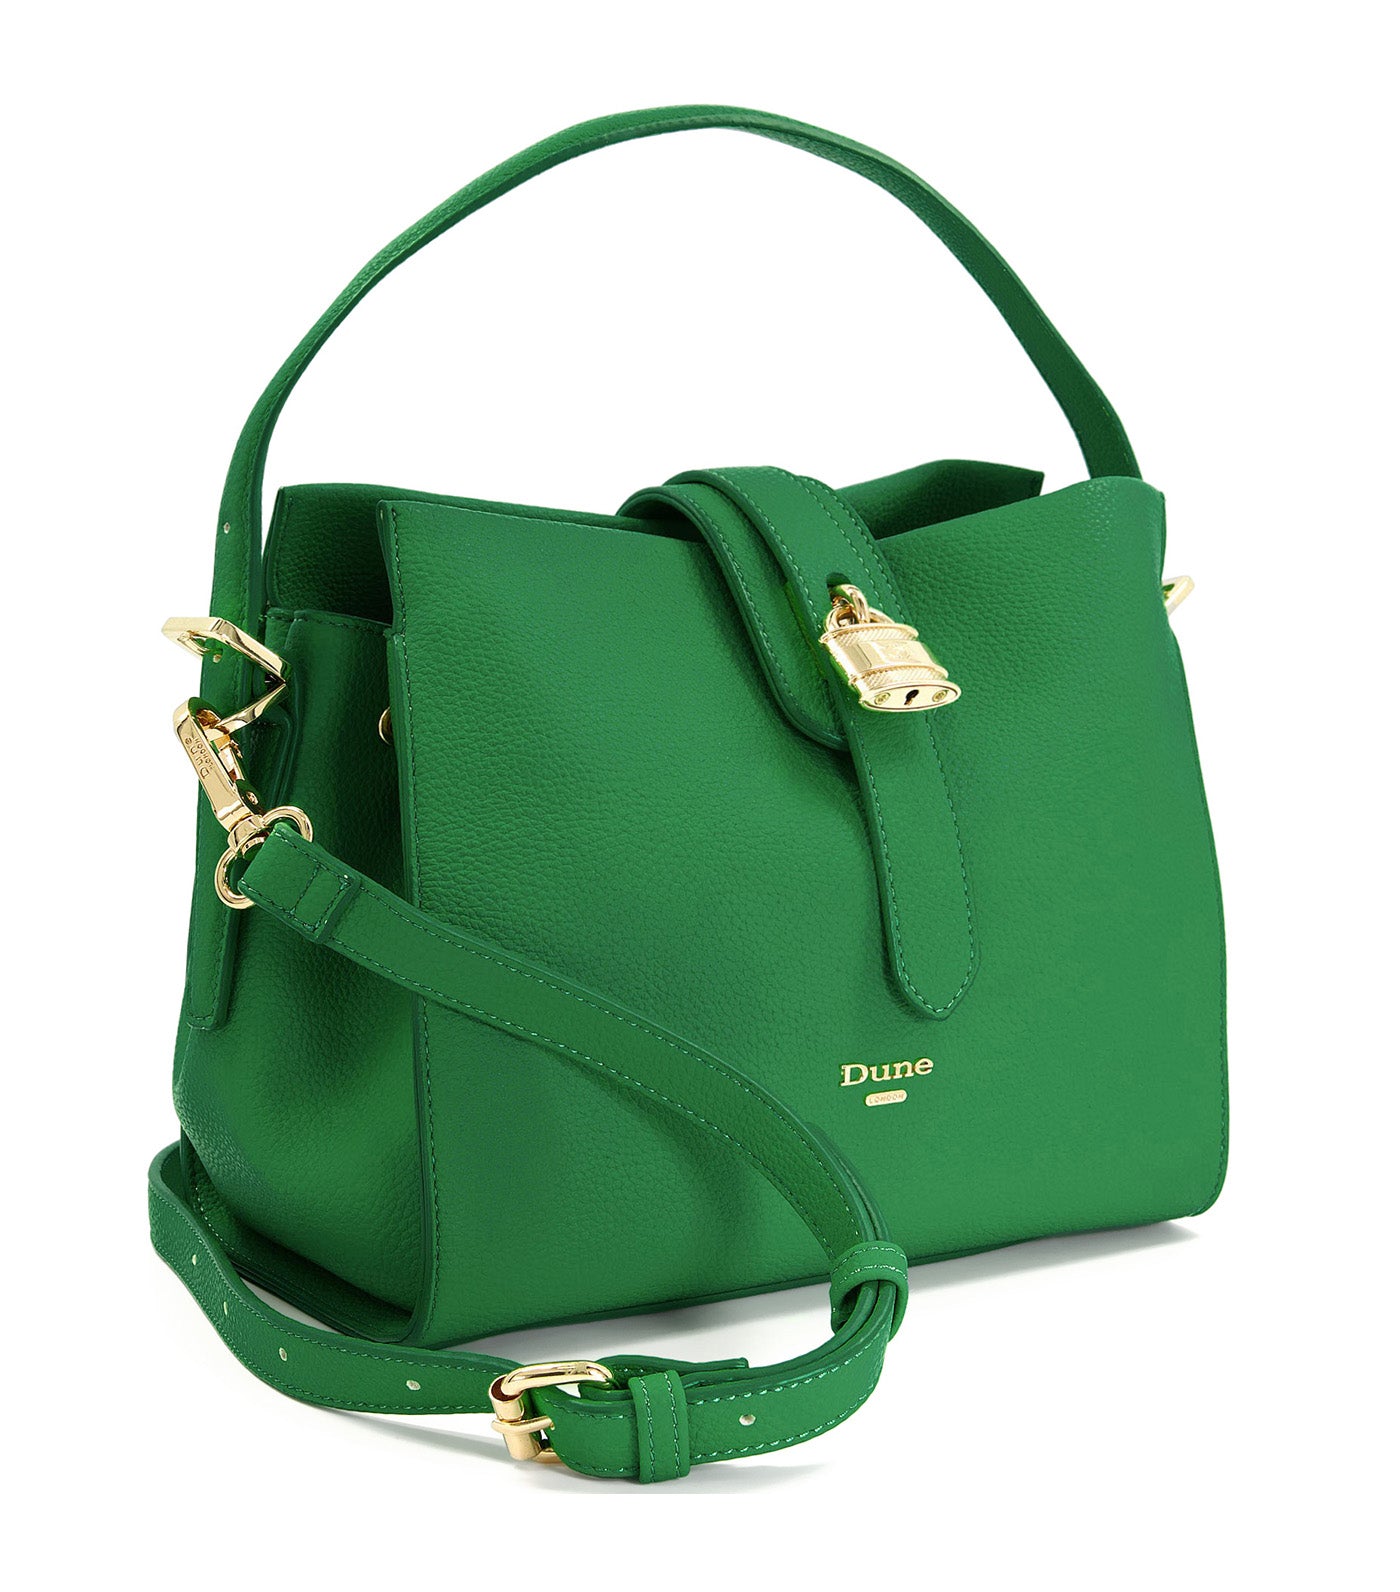 Daytona Padlock Grab Bag in Synthetic Green